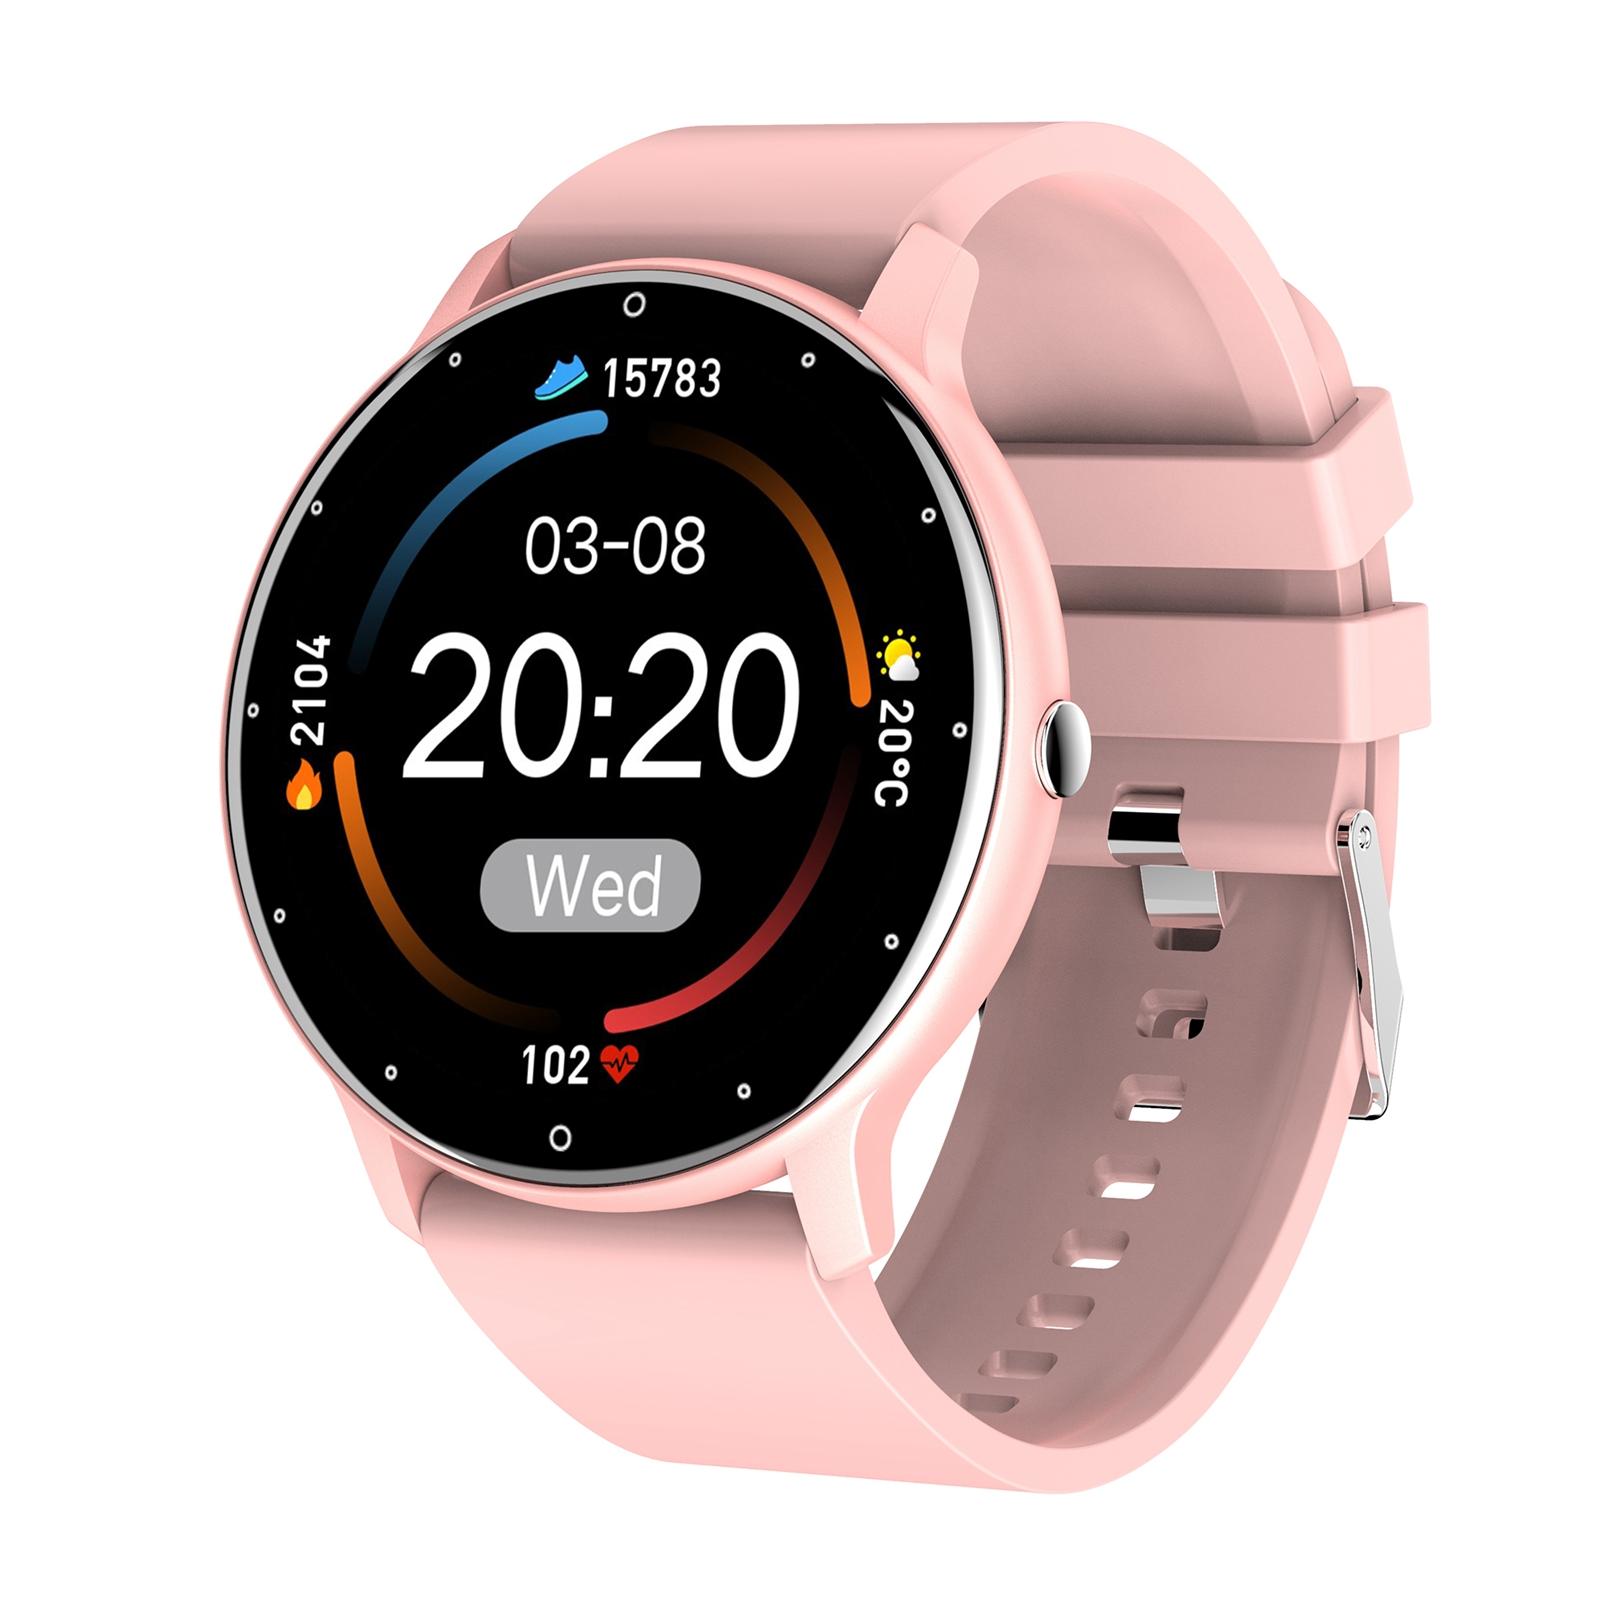 1.28 pollici Zl02D Smart Watch FitnessTracker conteggio passi cronometro Touchscreen polsino Bluetooth Smart Watch per Android iOS: Pink